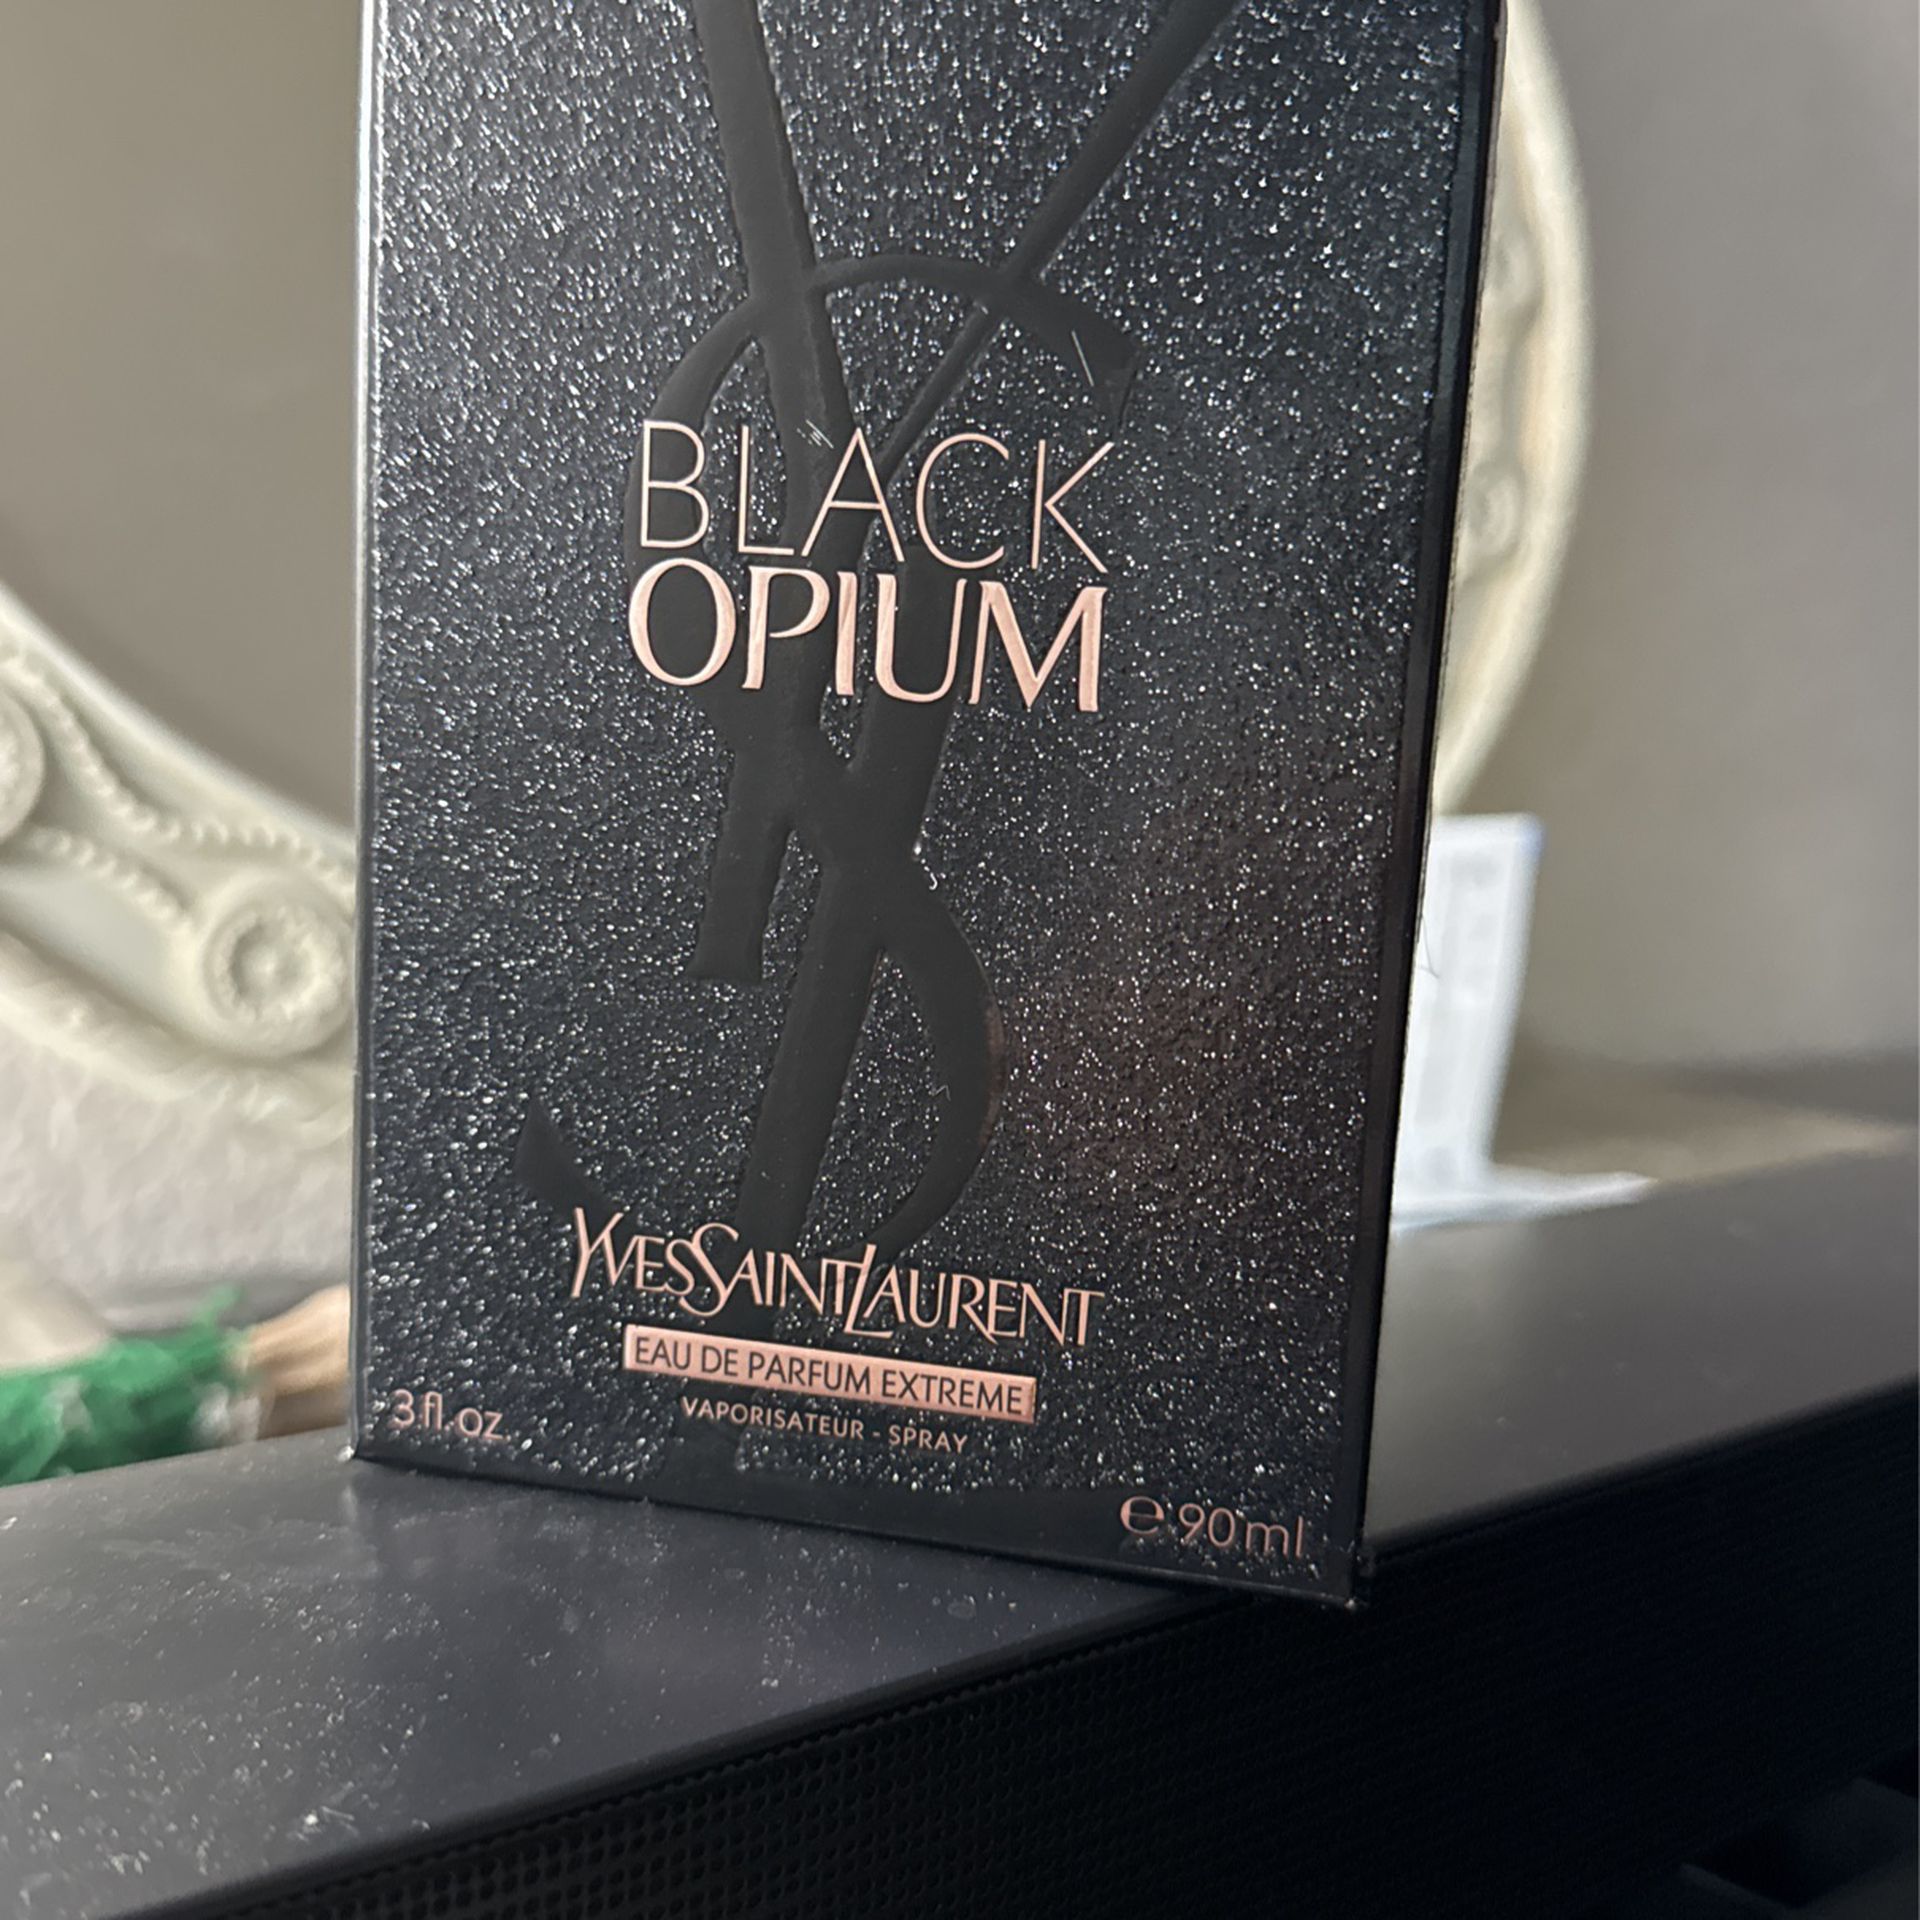 Black Opium Perfume